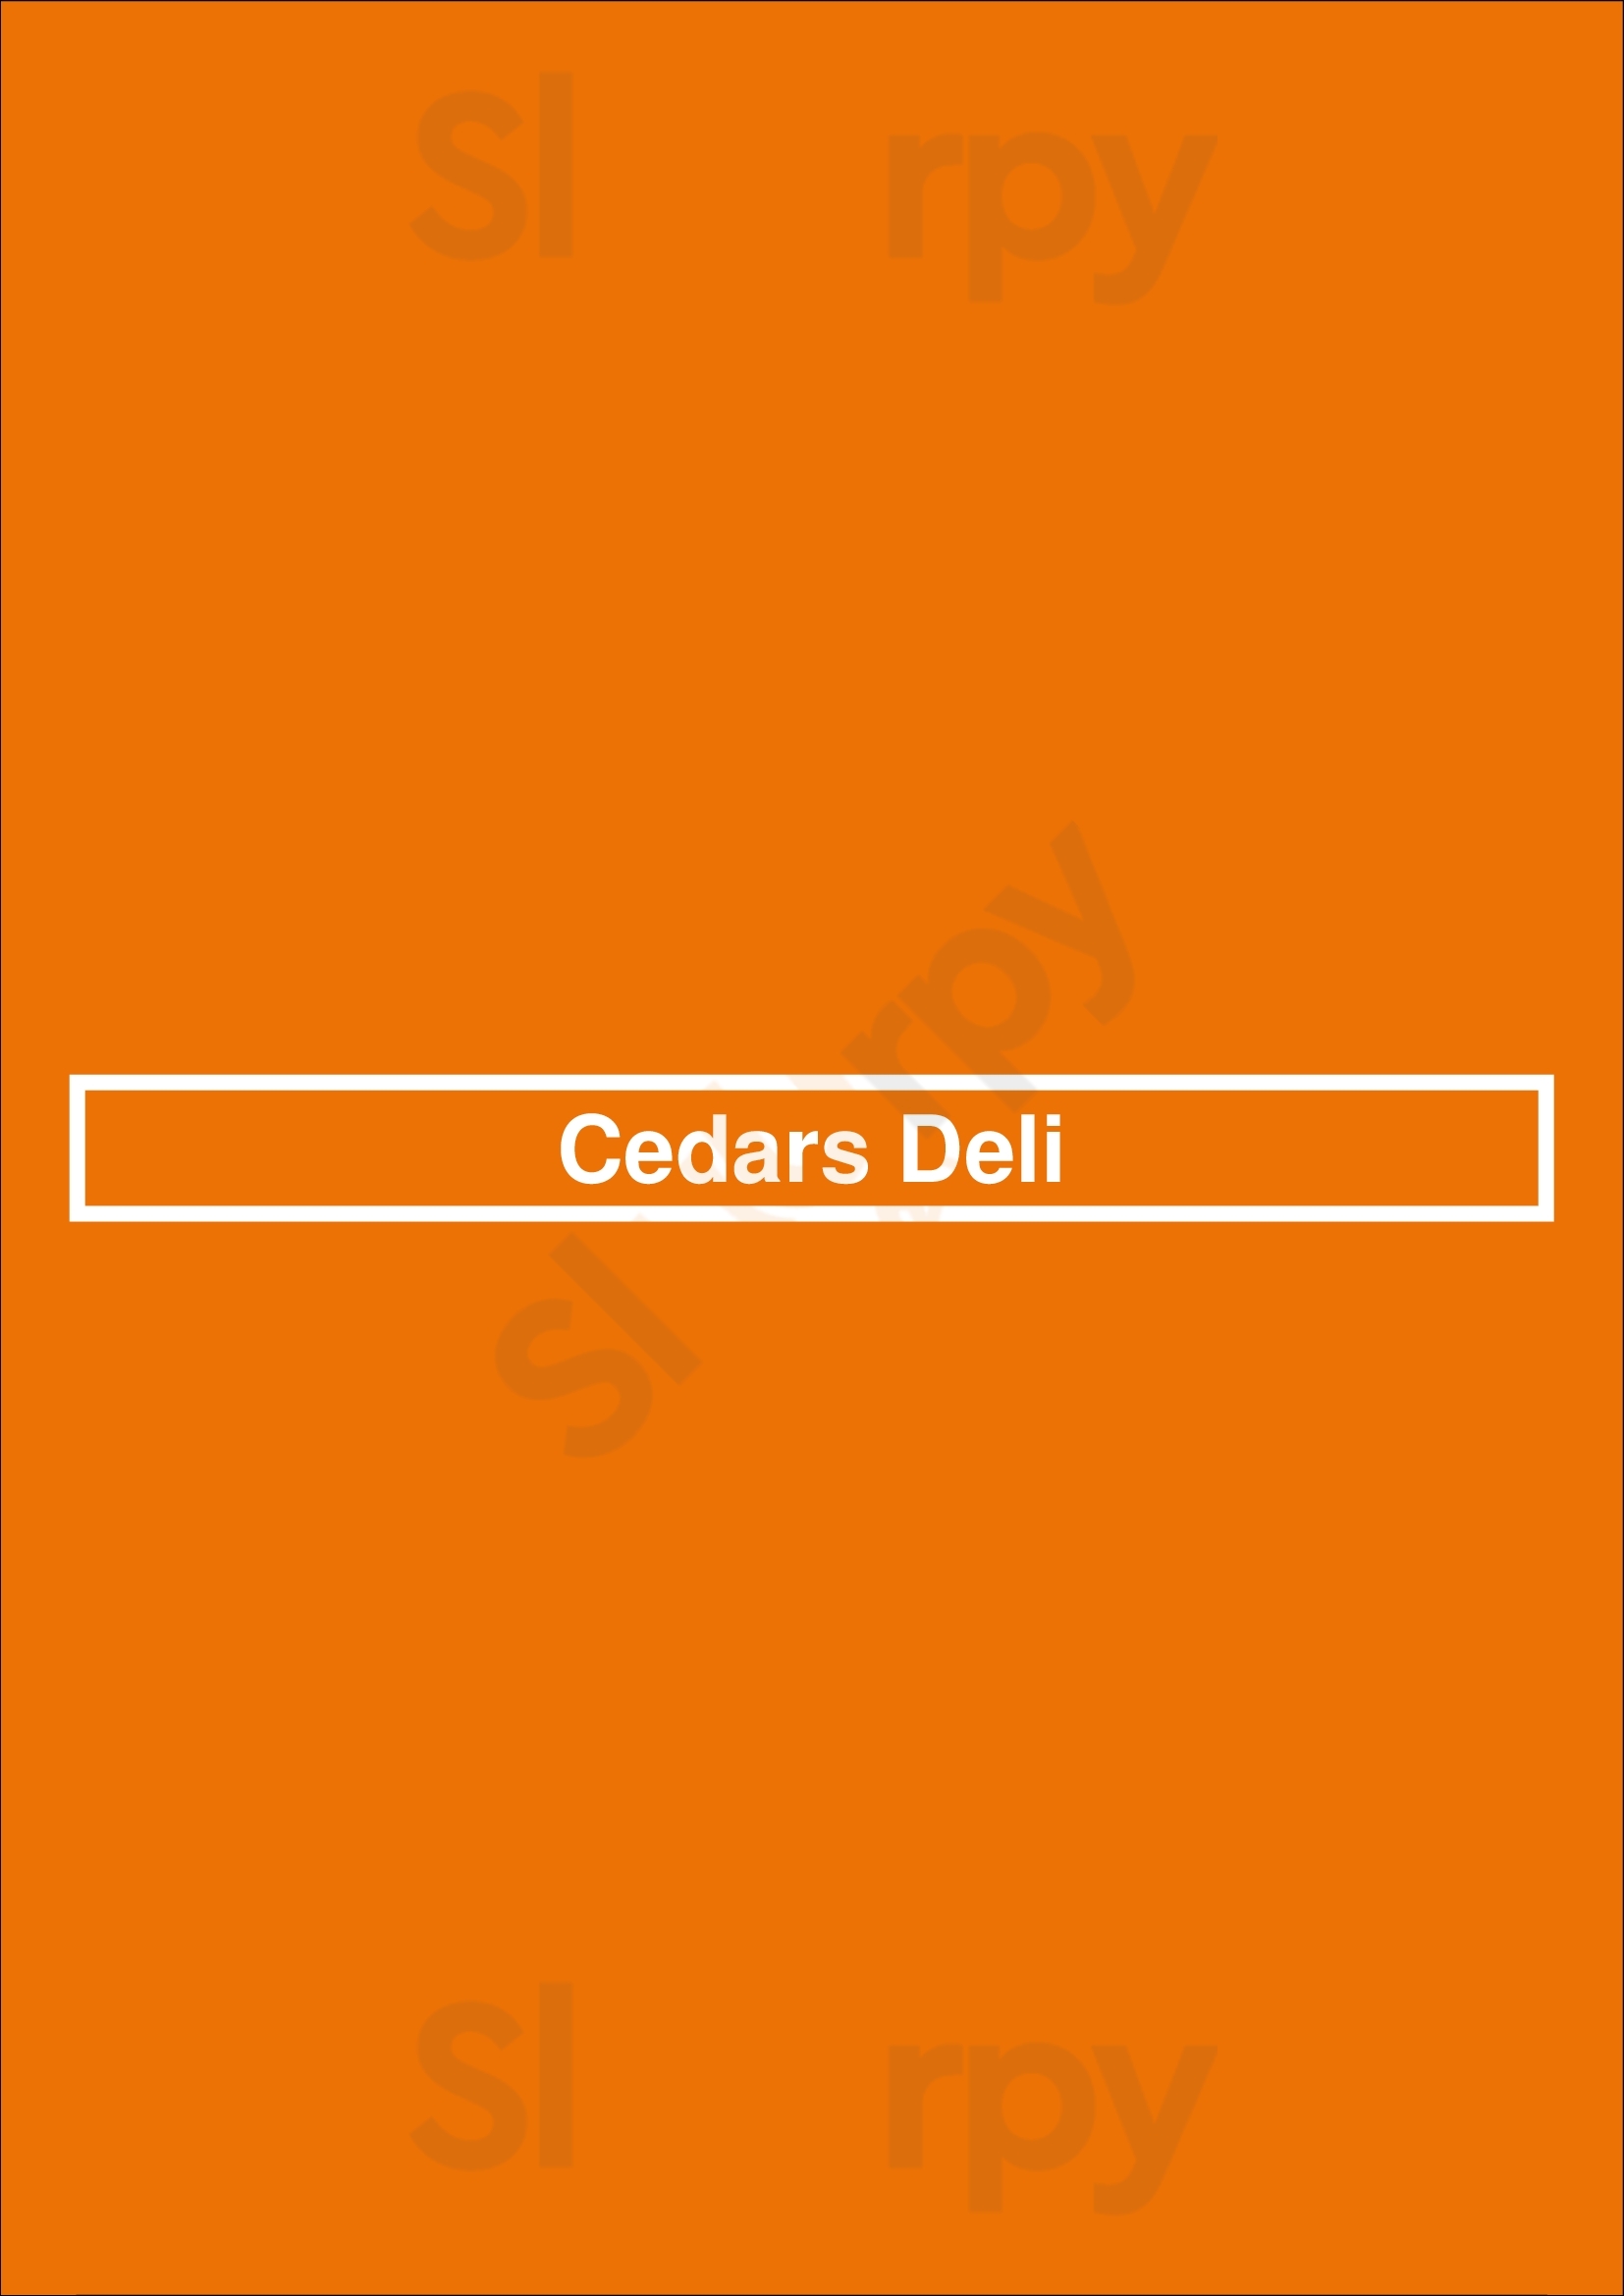 Cedars Deli Calgary Menu - 1